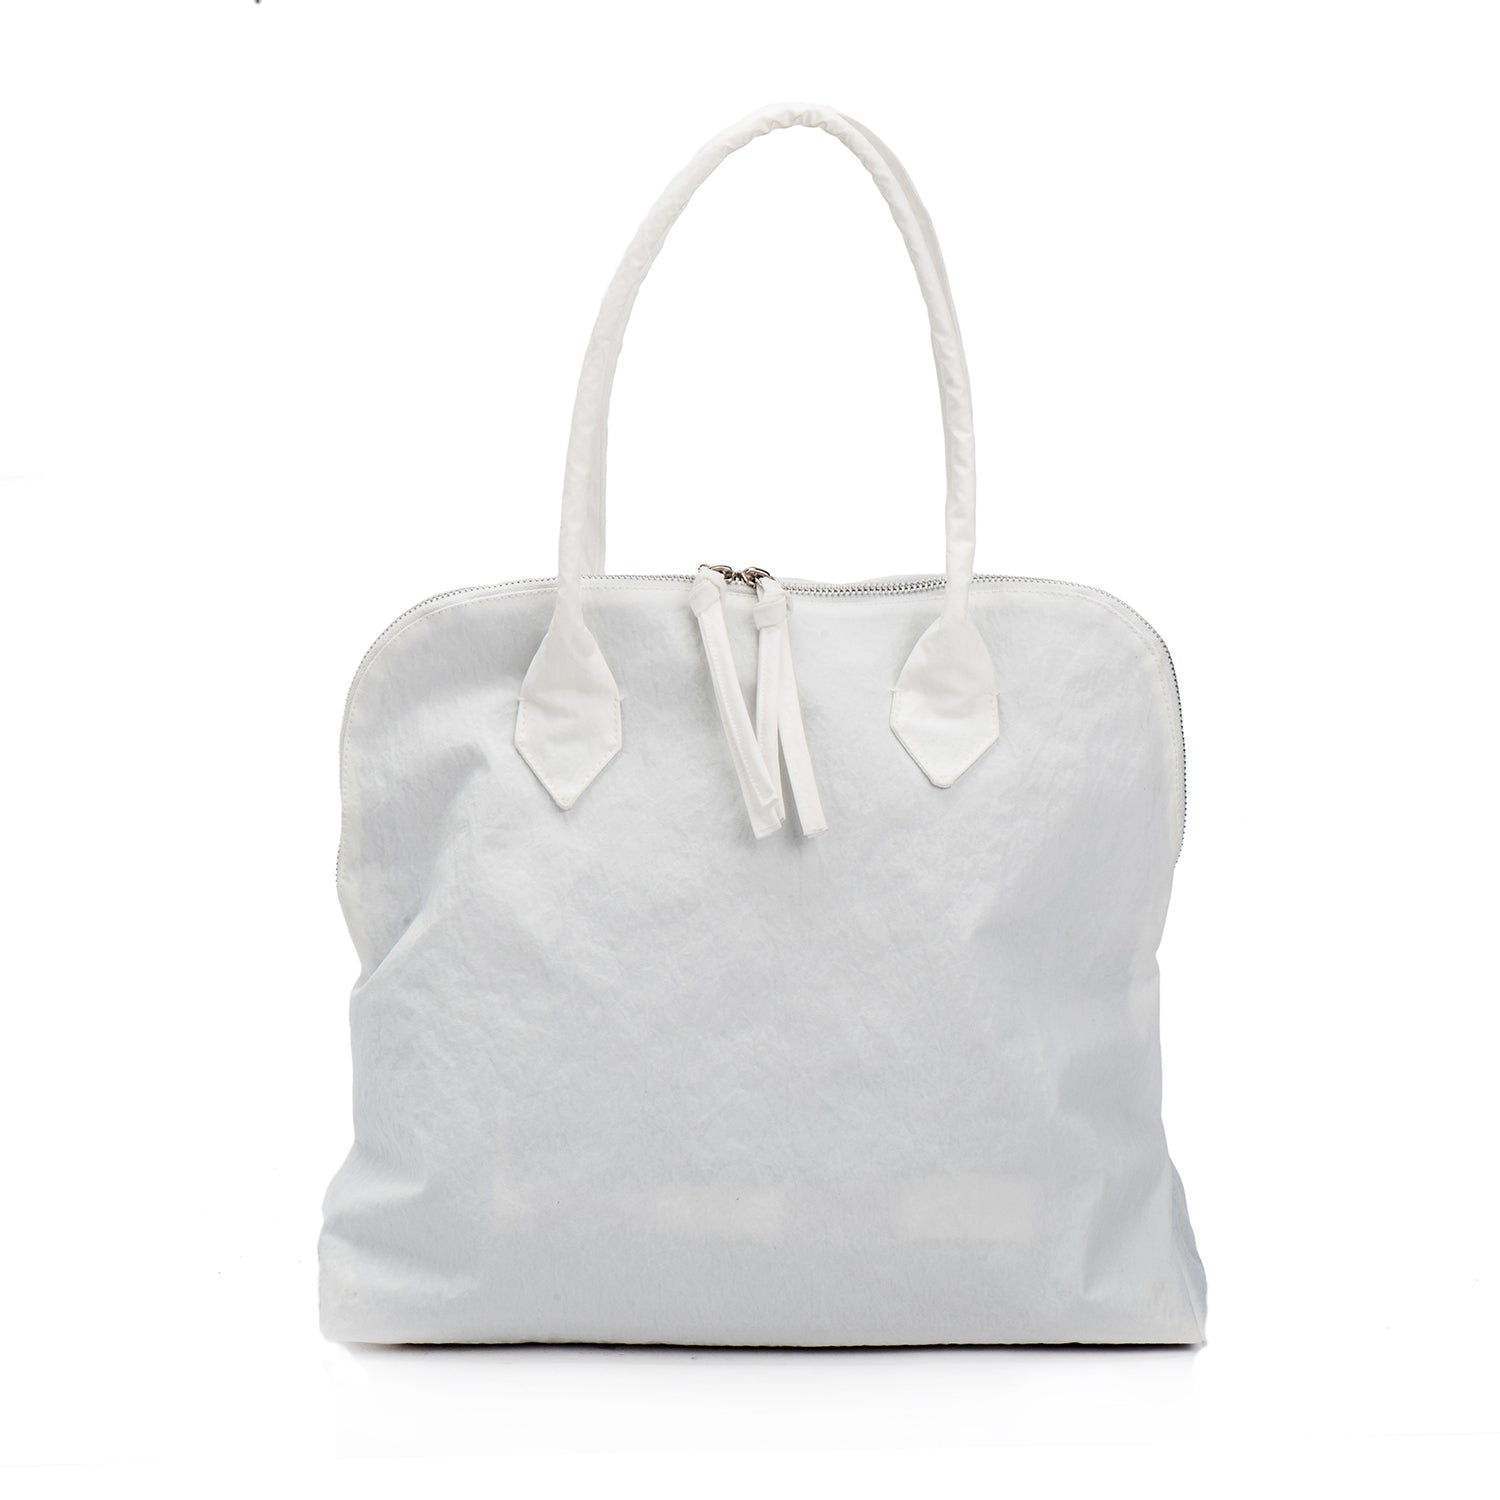 sales outlets COACH BAG. Black Fabric and Patent COACH bag | naplexexam.com